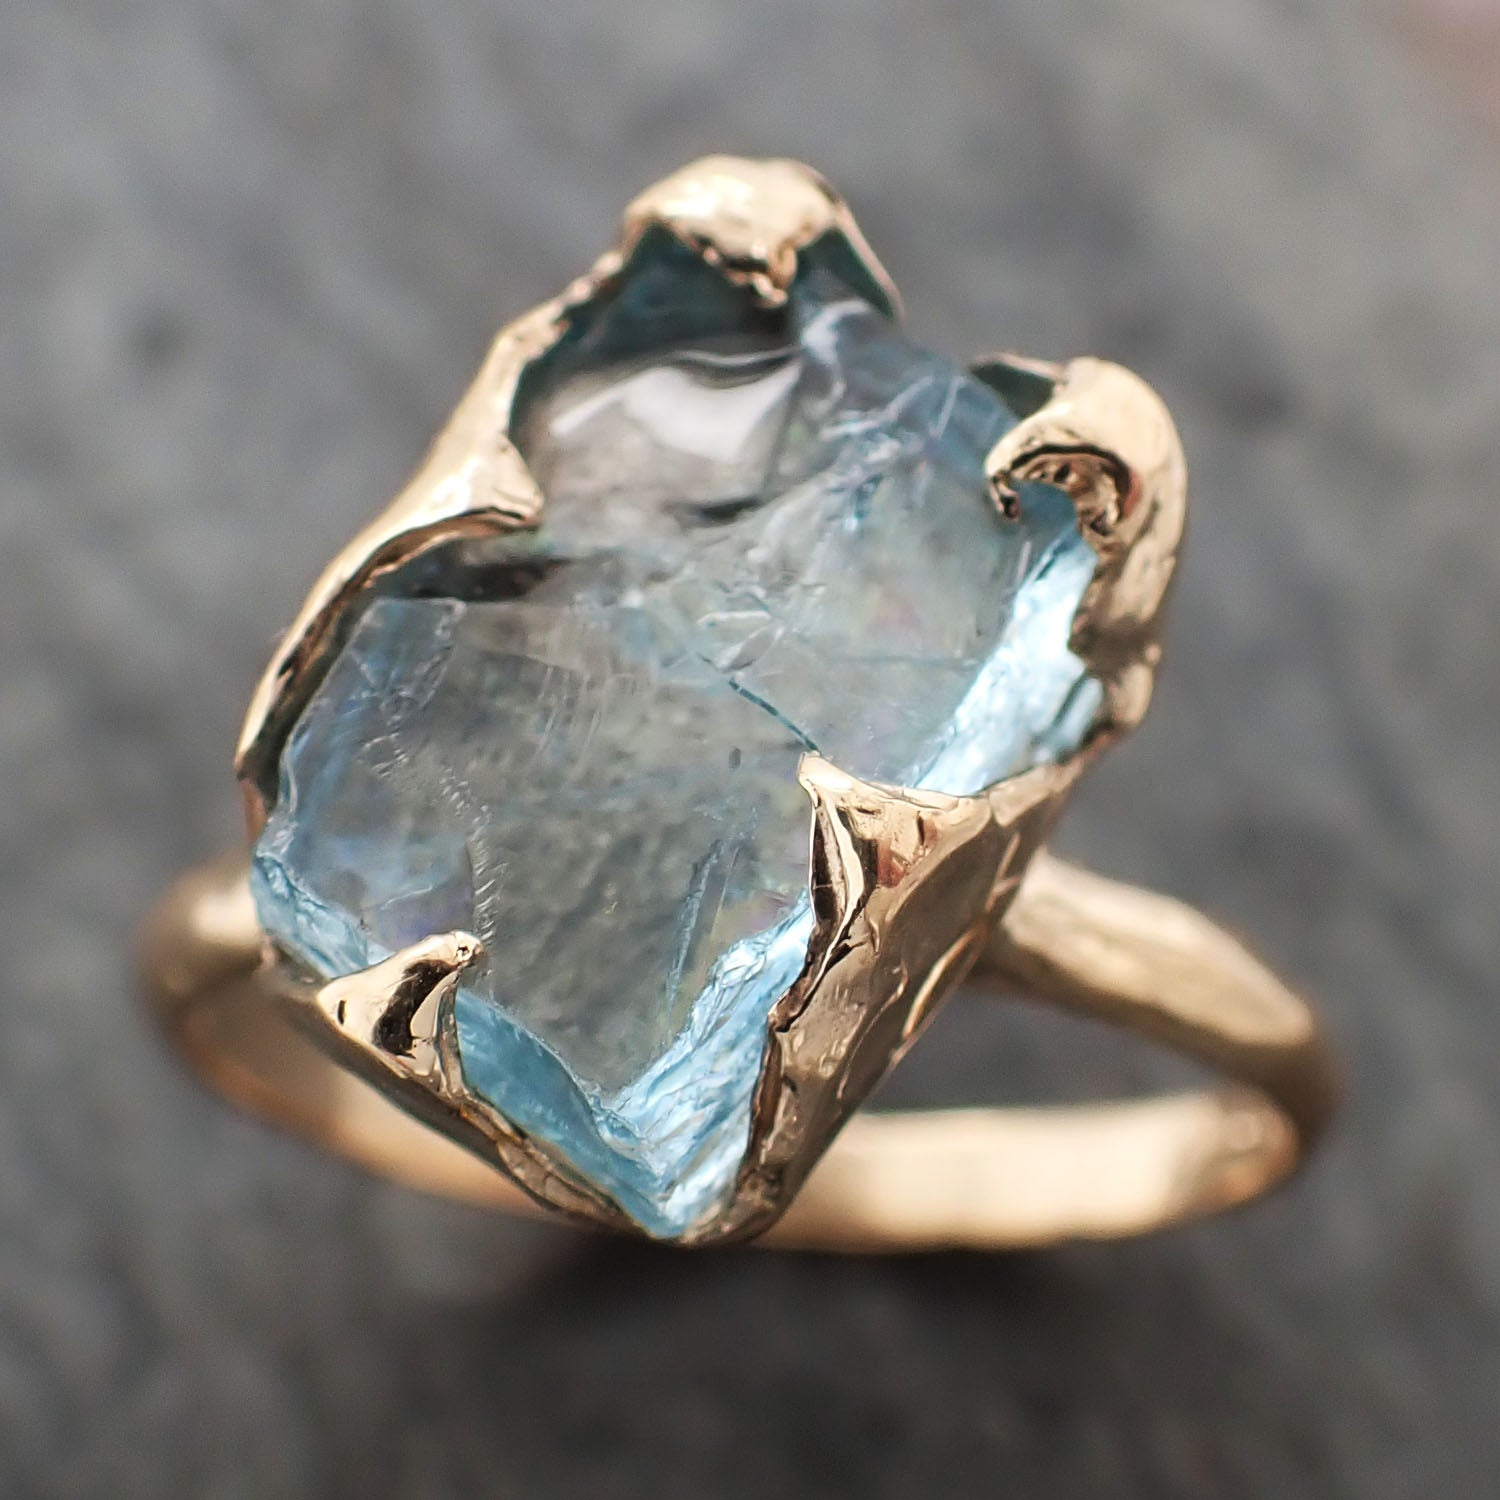 raw uncut aquamarine solitaire rose gold ring custom one of a kind gemstone ring bespoke byangeline 2322 Alternative Engagement